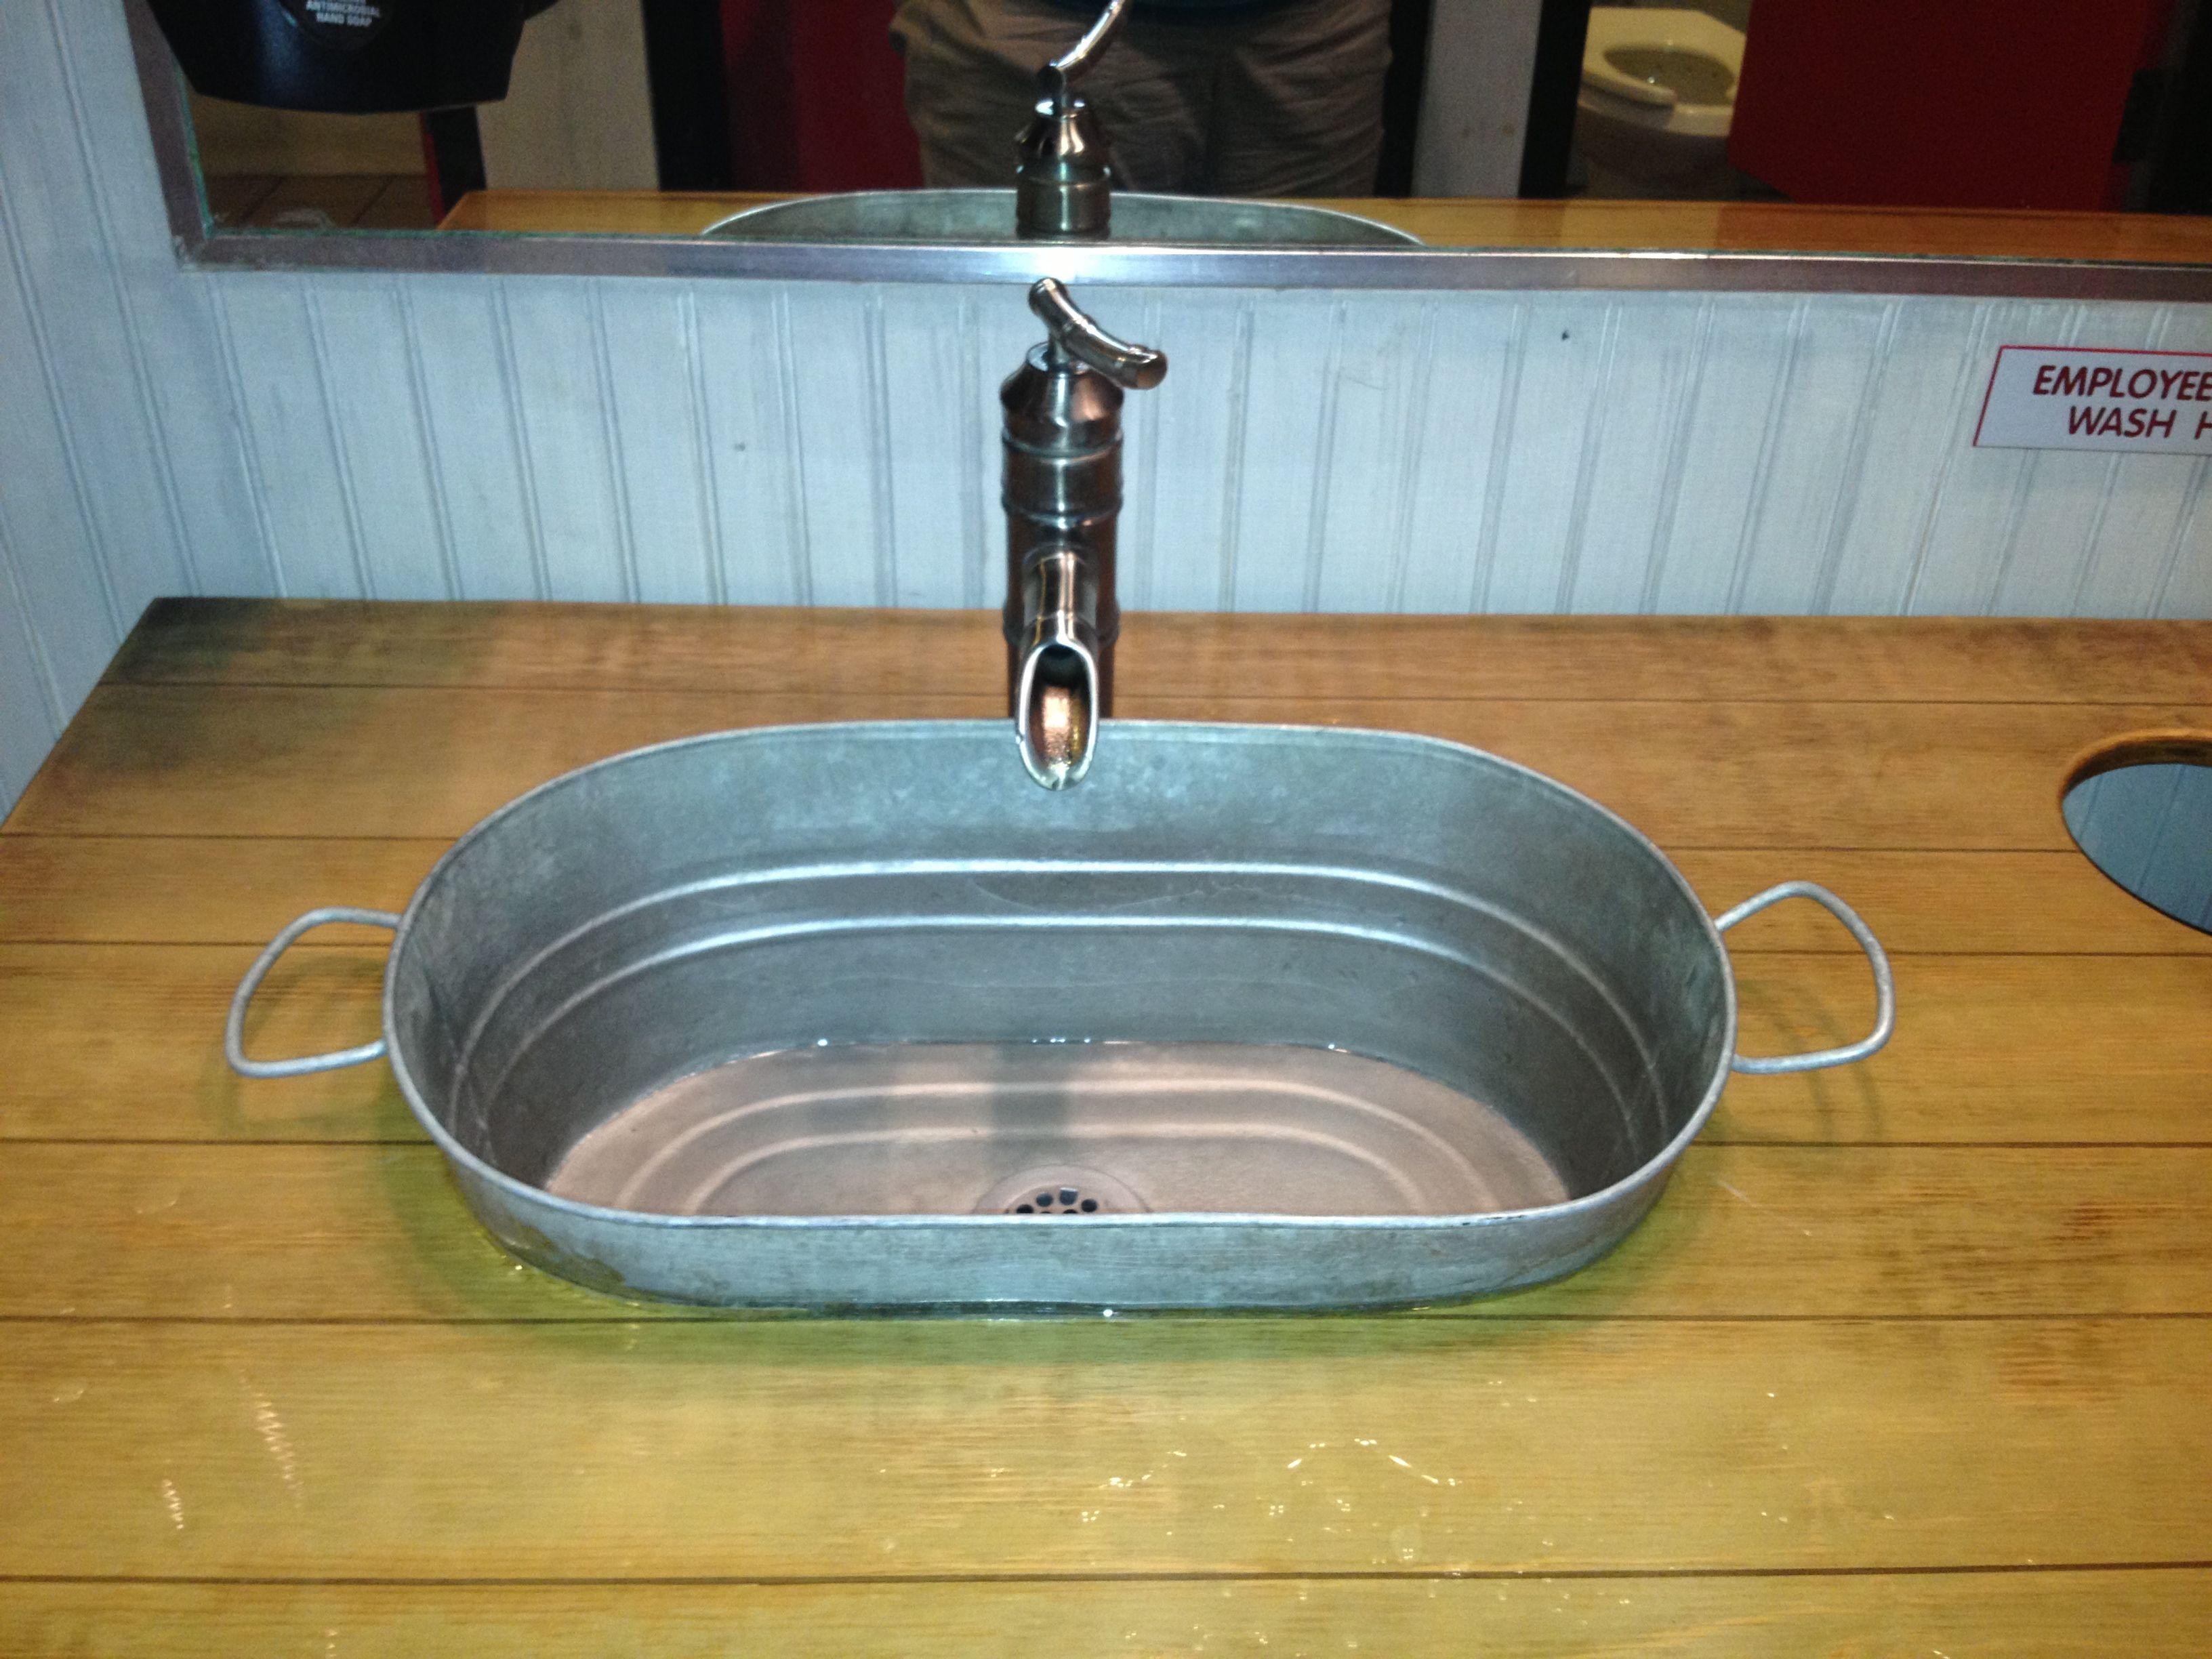 Best ideas about DIY Bathroom Sink
. Save or Pin diy bathroom sink from a bucket Now.